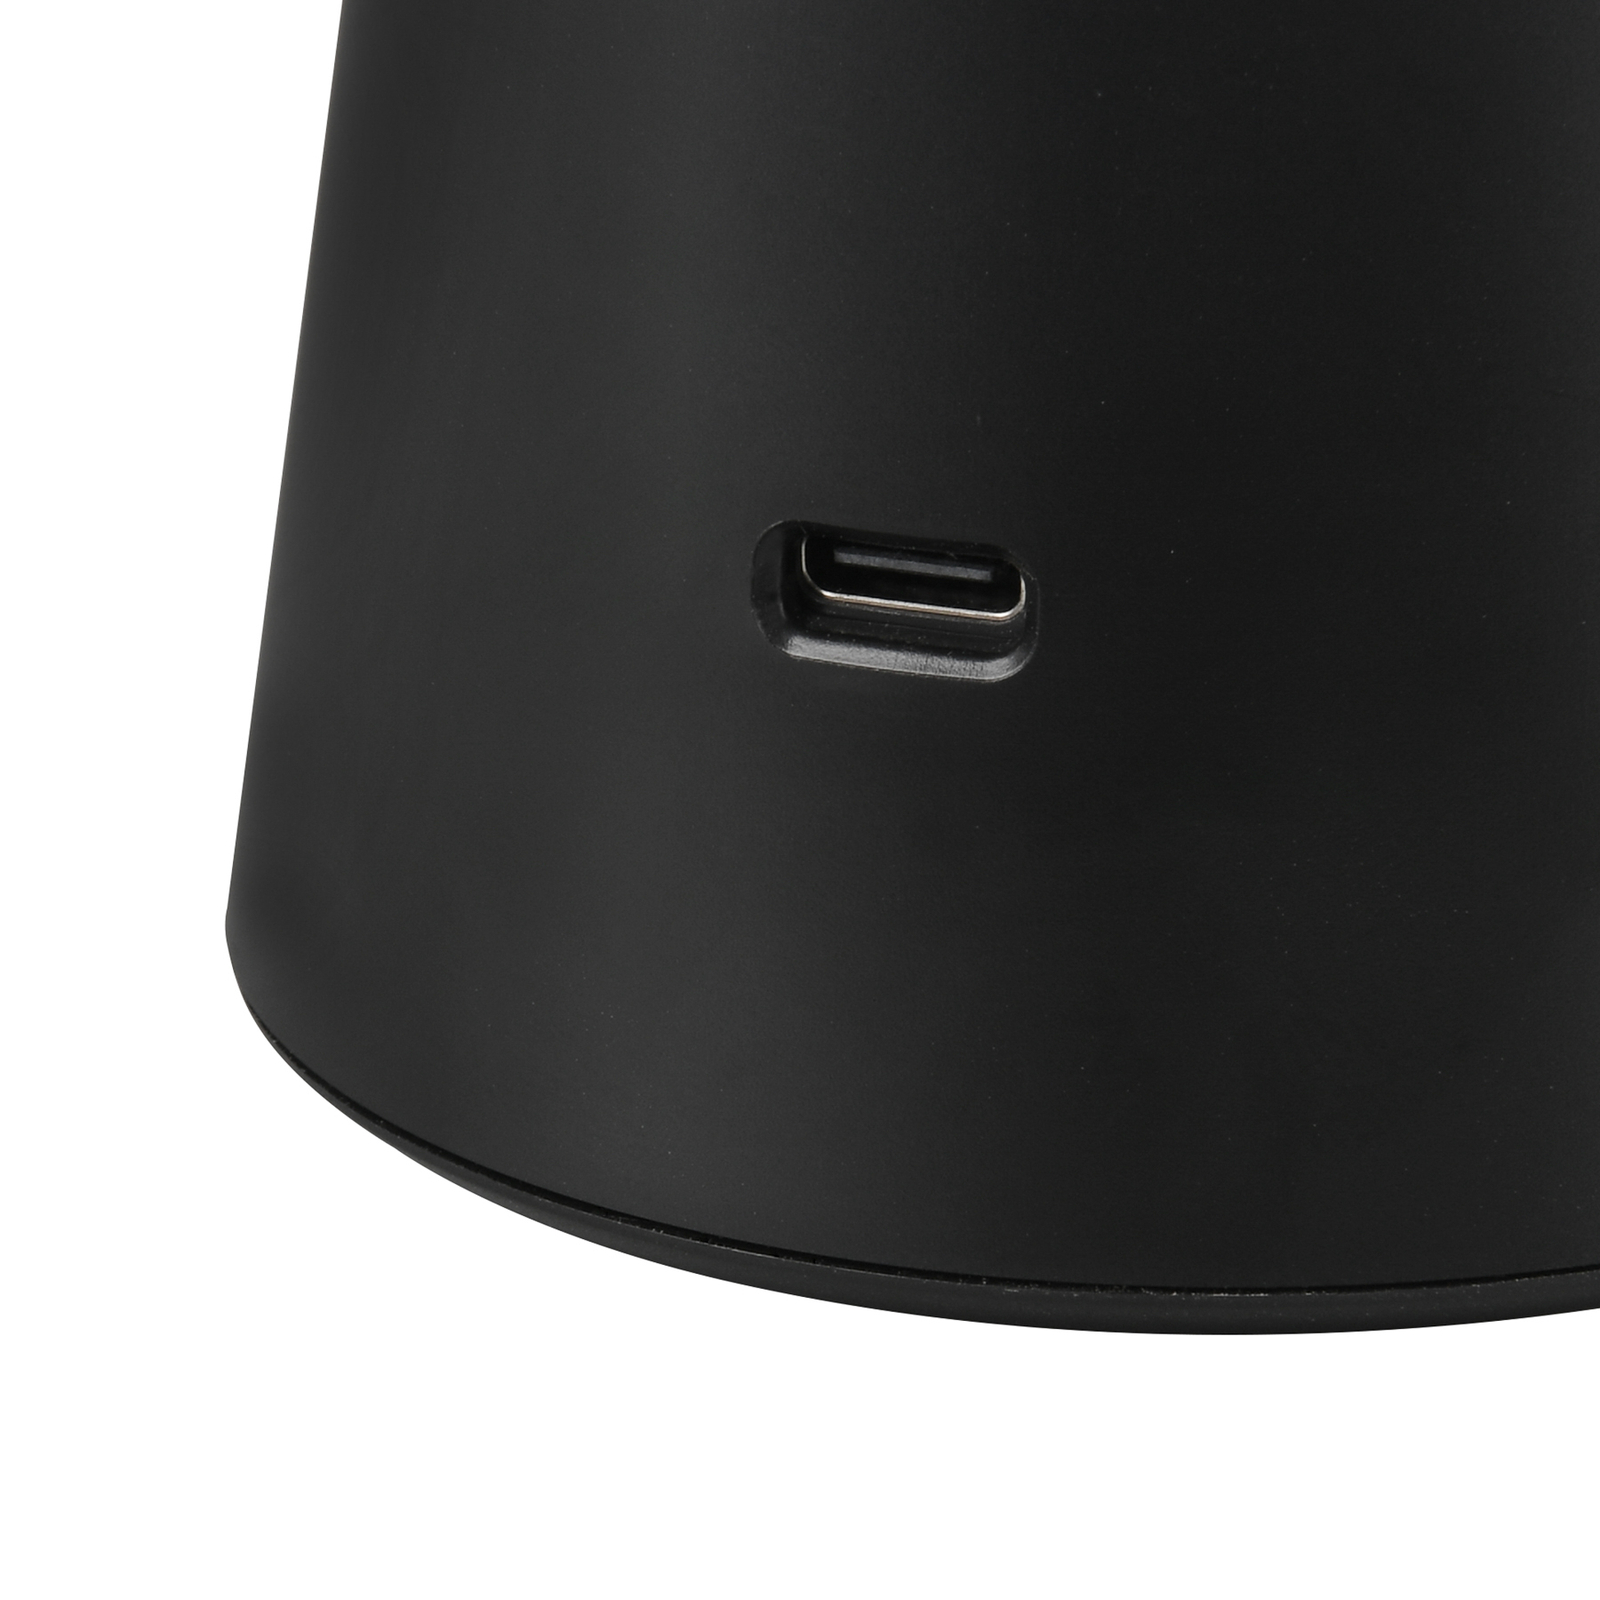 Torrez LED-uppladdningsbar bordslampa, svart, höjd 28,5 cm, CCT